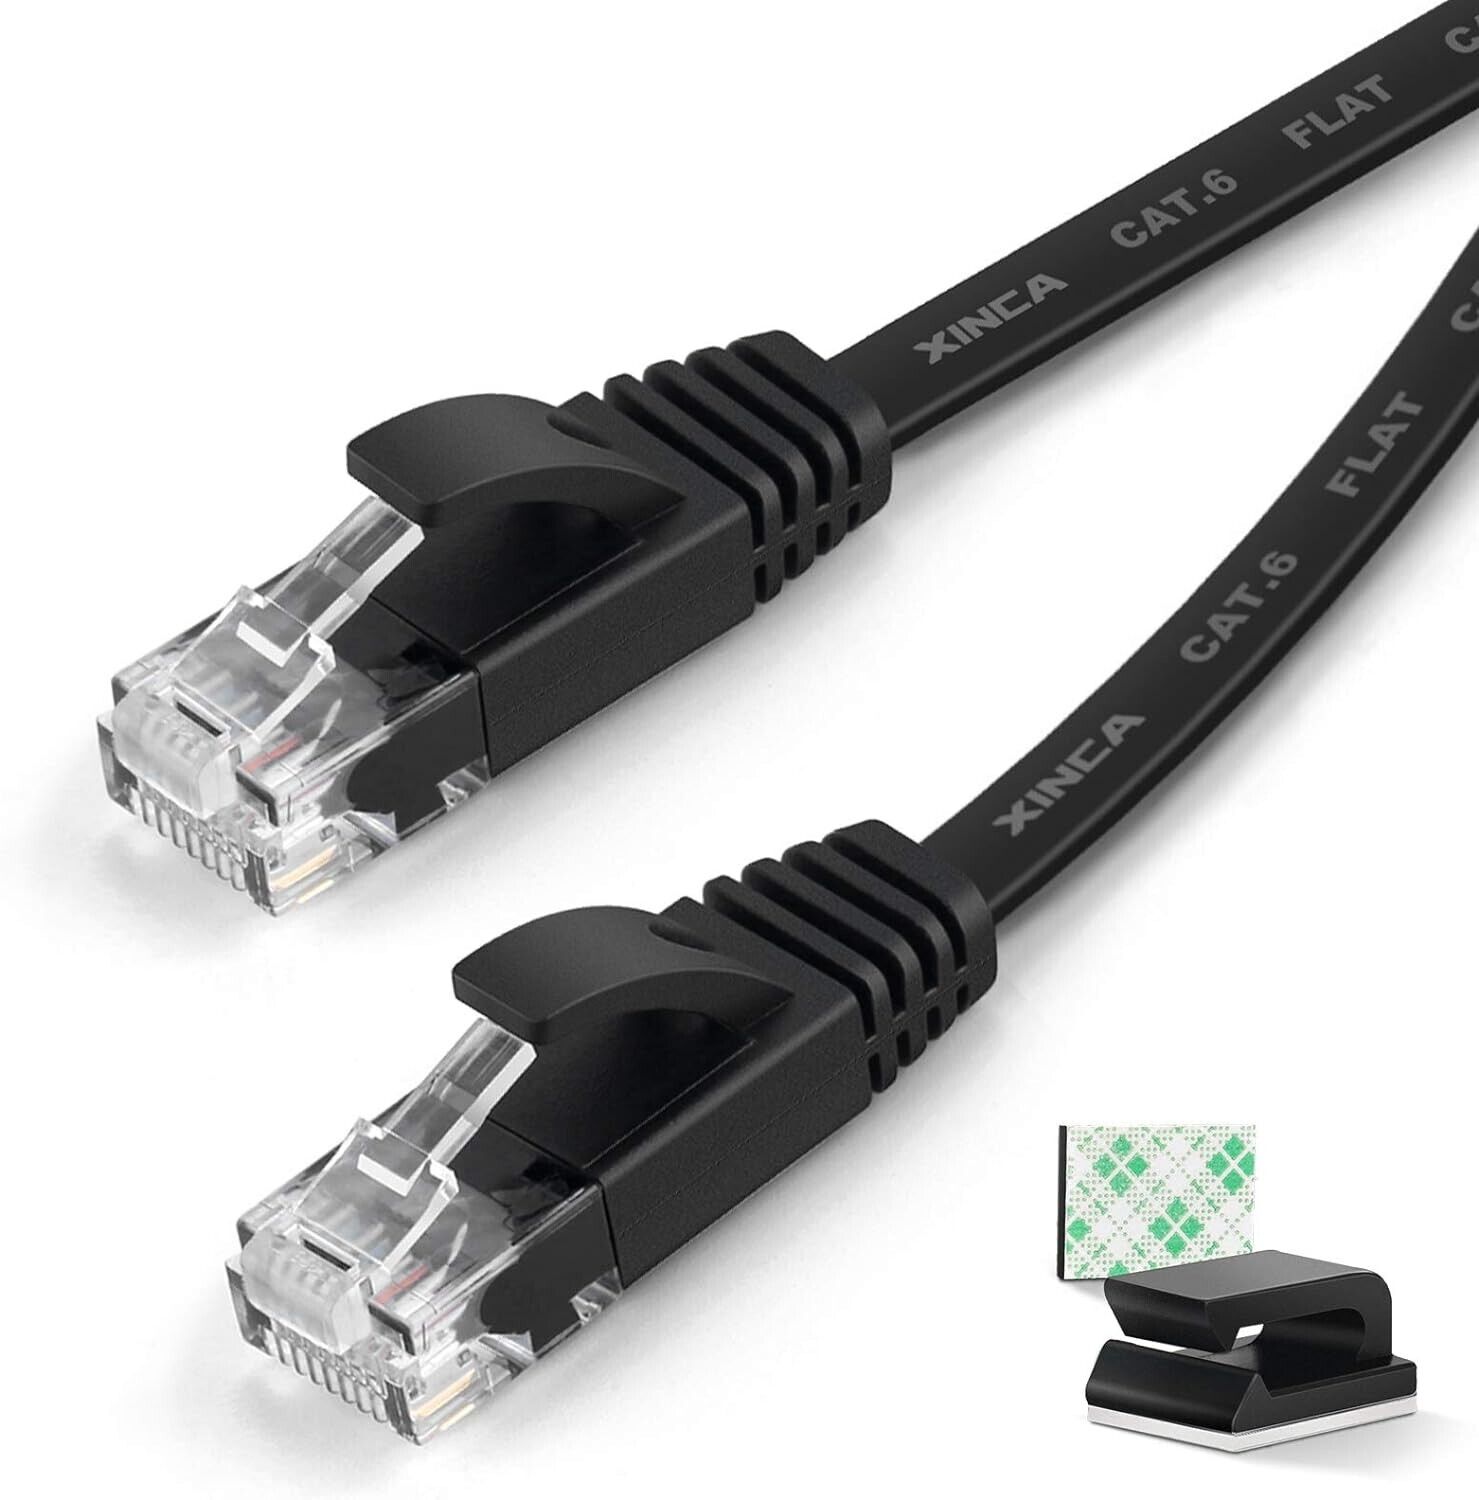 Gigabit Cat6 Flat Ethernet Cable 15 ft - Snagless RJ45 Connectors, UL Certified